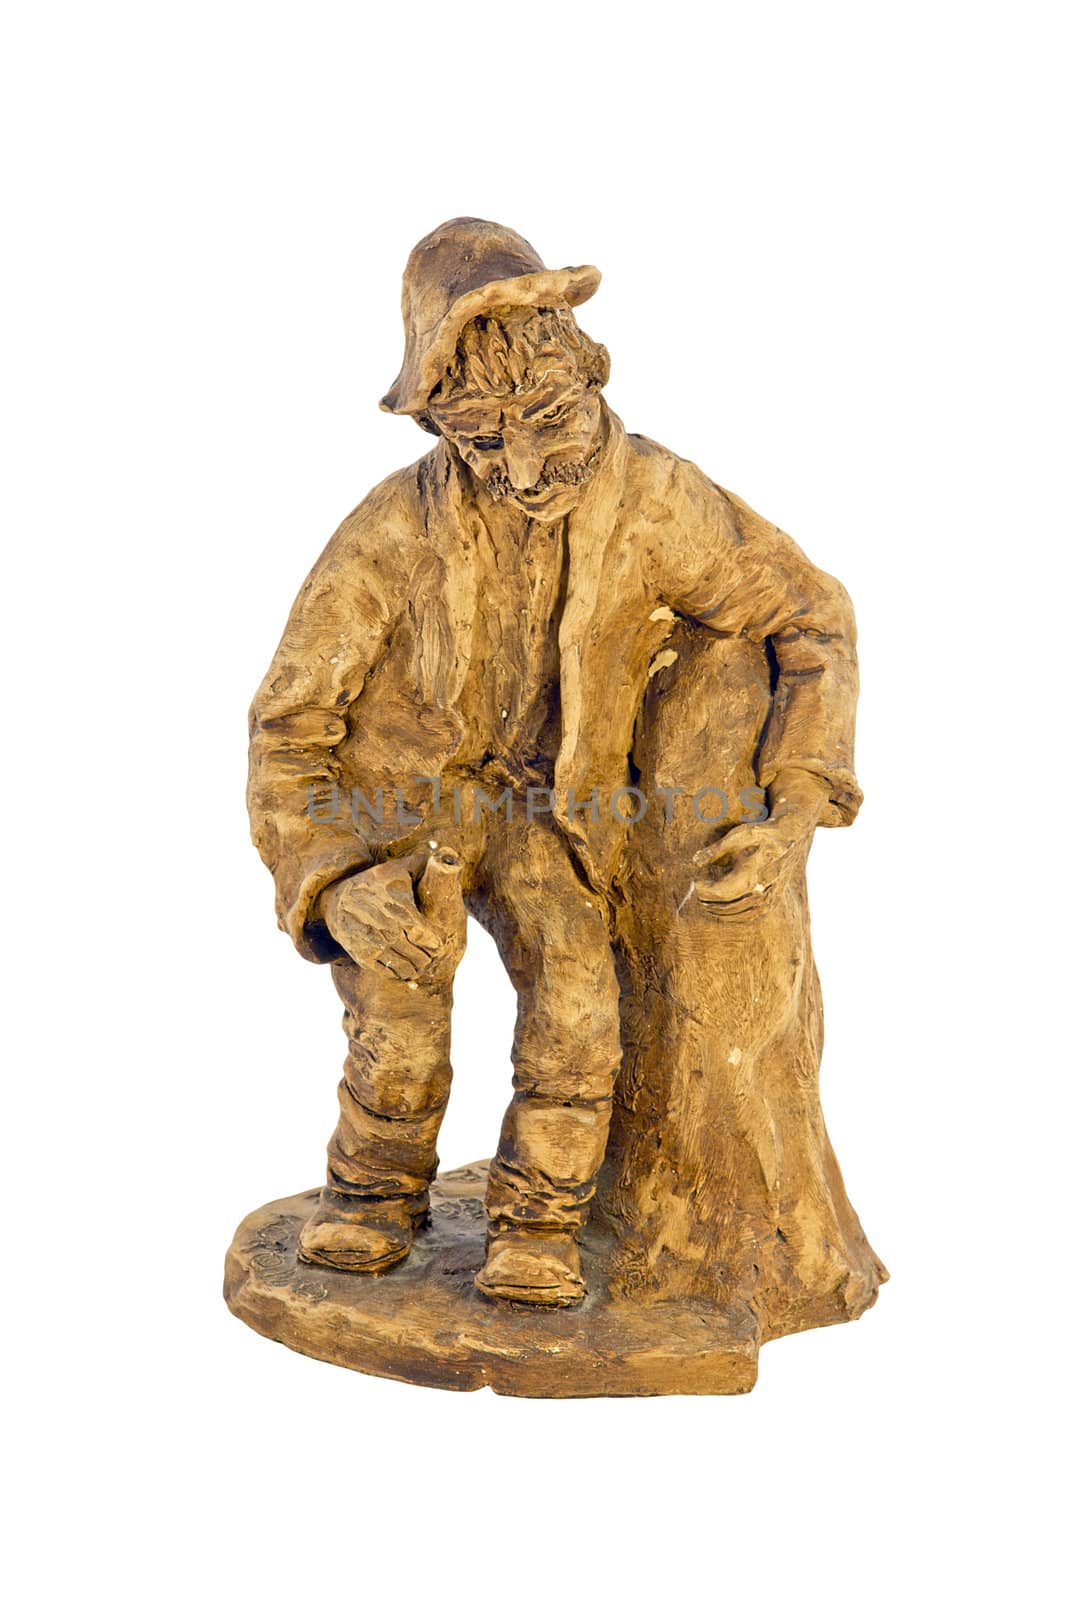 Wooden statue by renegadewanderer